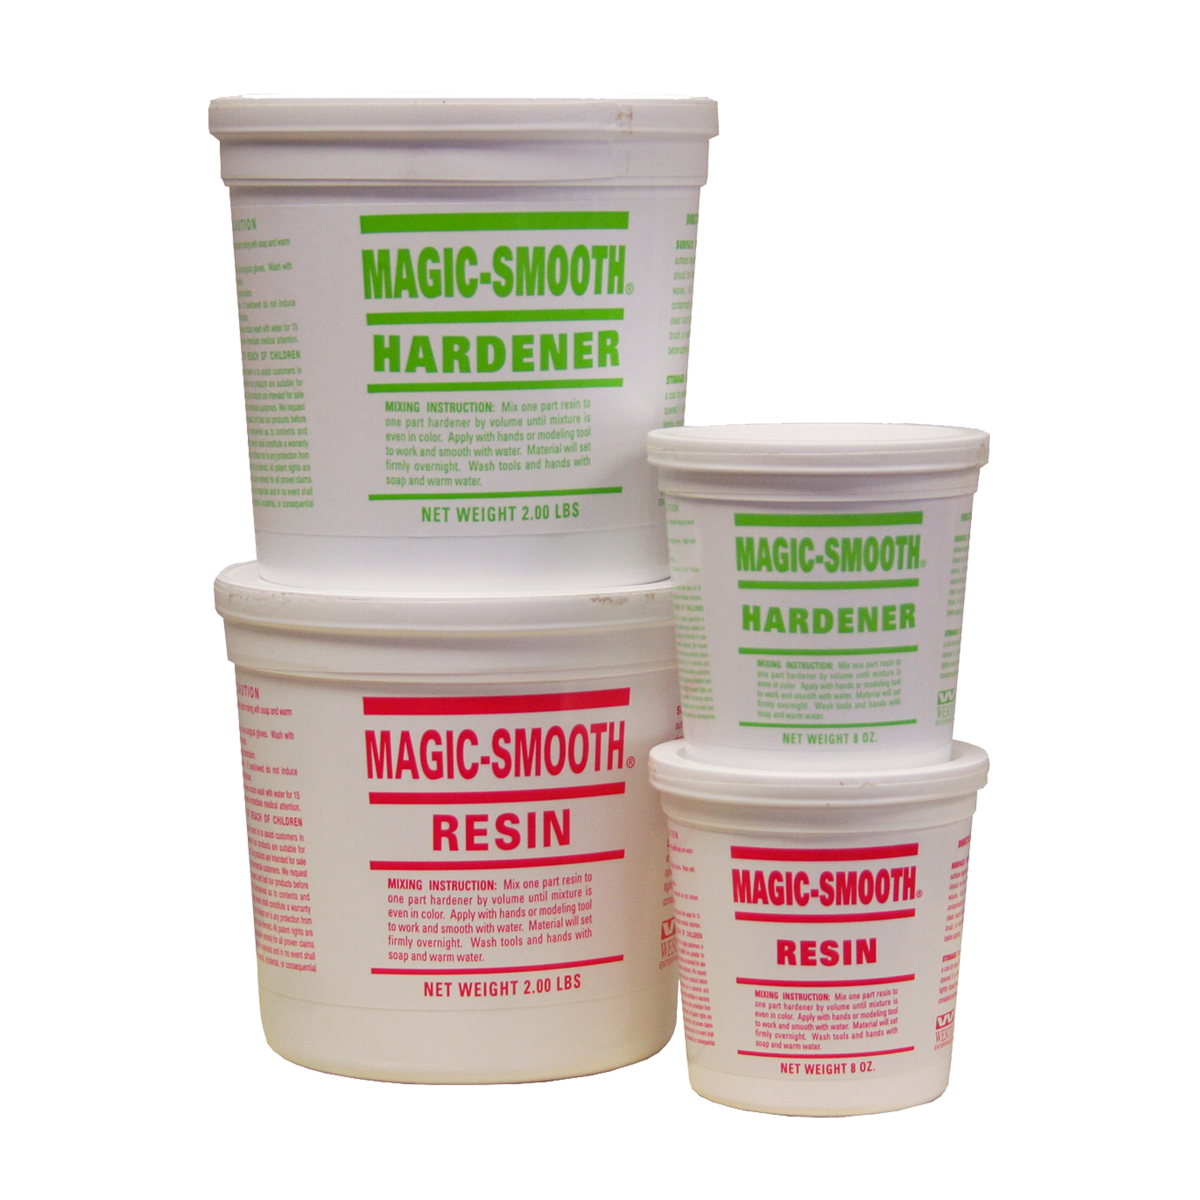 Magic Smooth - Matuska Taxidermy Supply Company